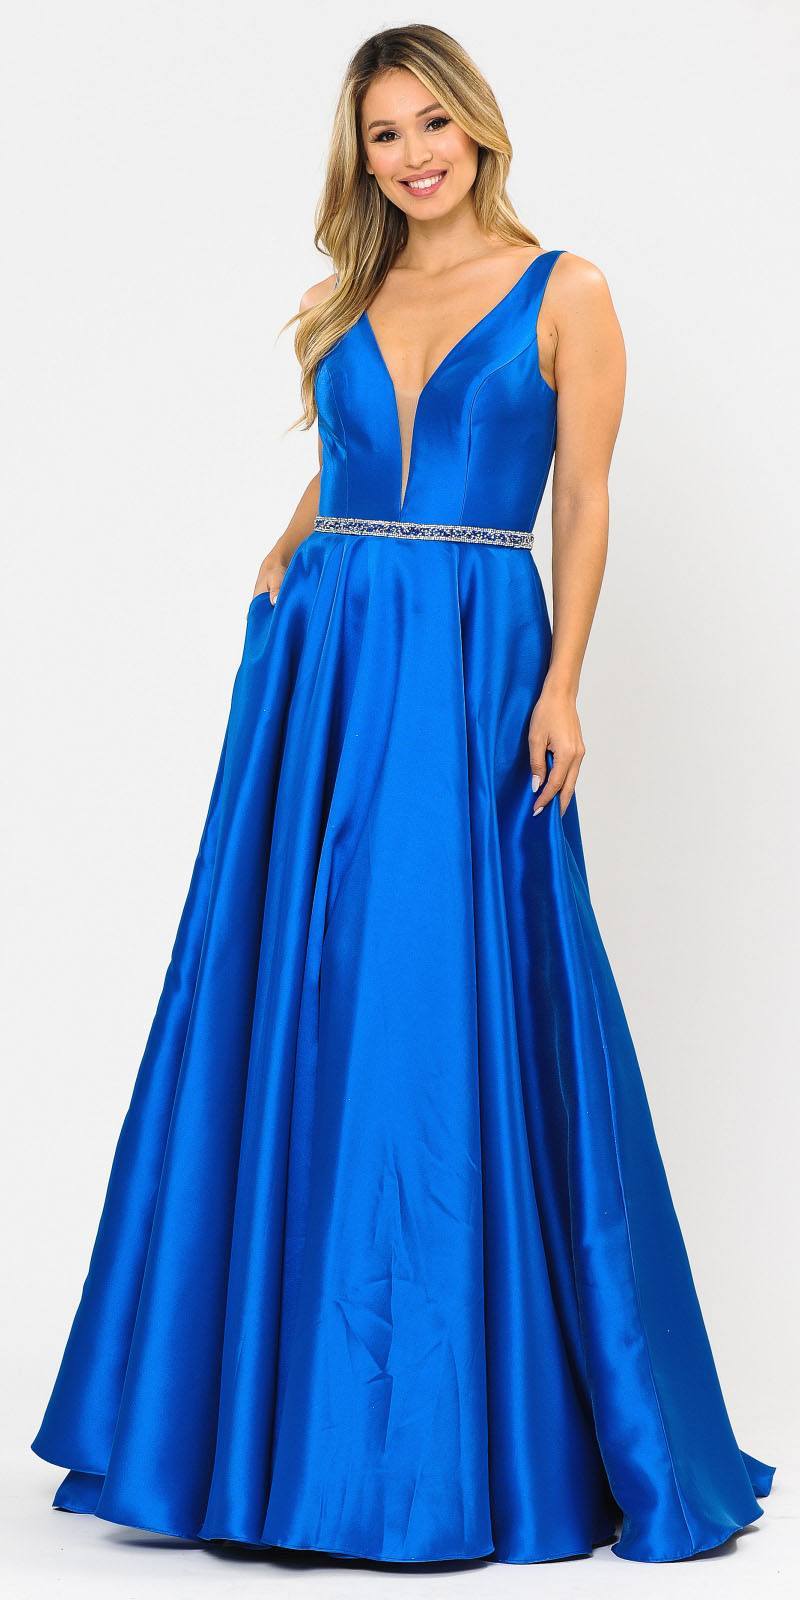 Poly USA 8682 V-Neck and Back Royal Blue Long Prom Dress with Pockets